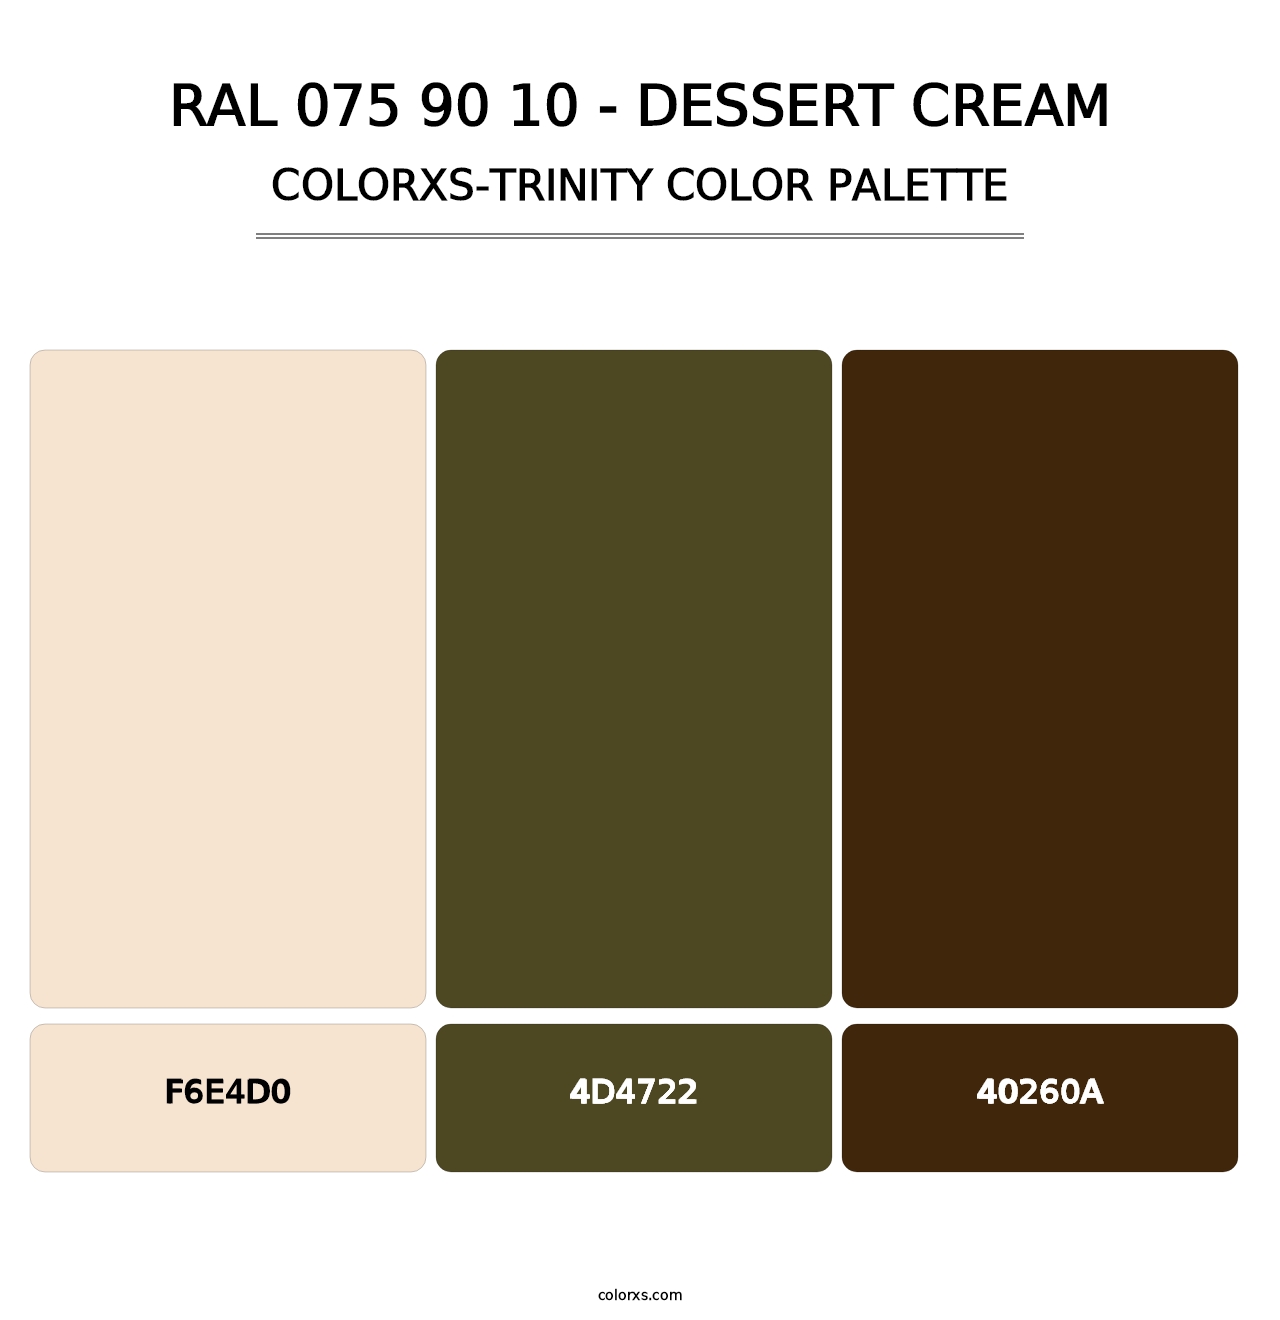 RAL 075 90 10 - Dessert Cream - Colorxs Trinity Palette